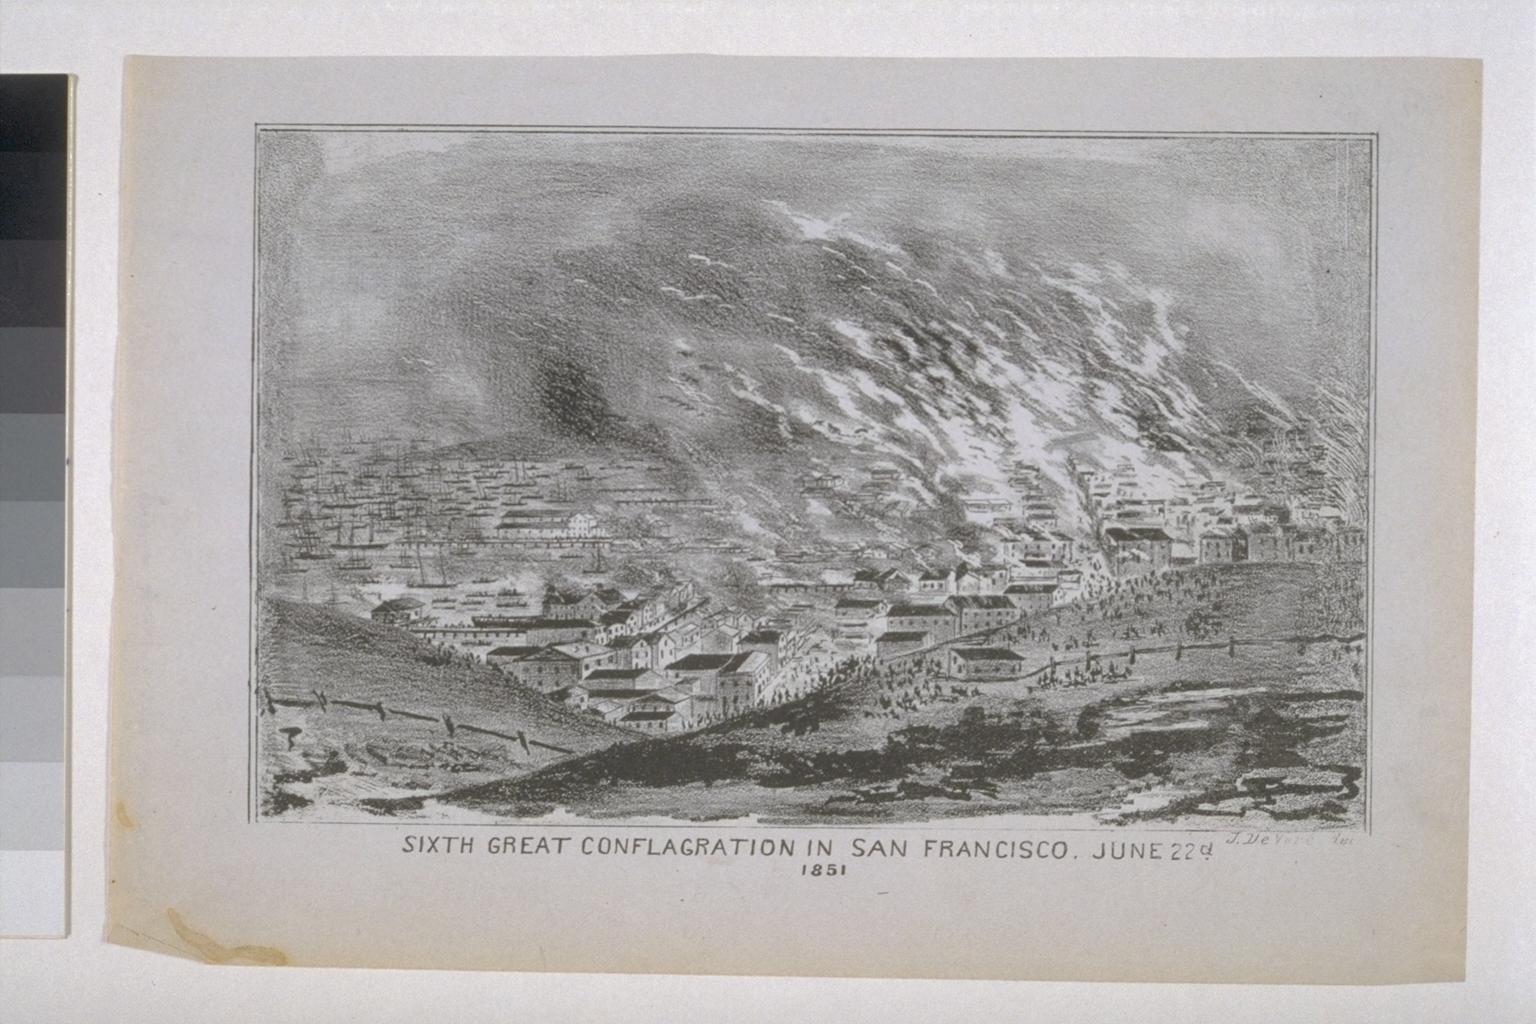 San Francisco fire (1851).